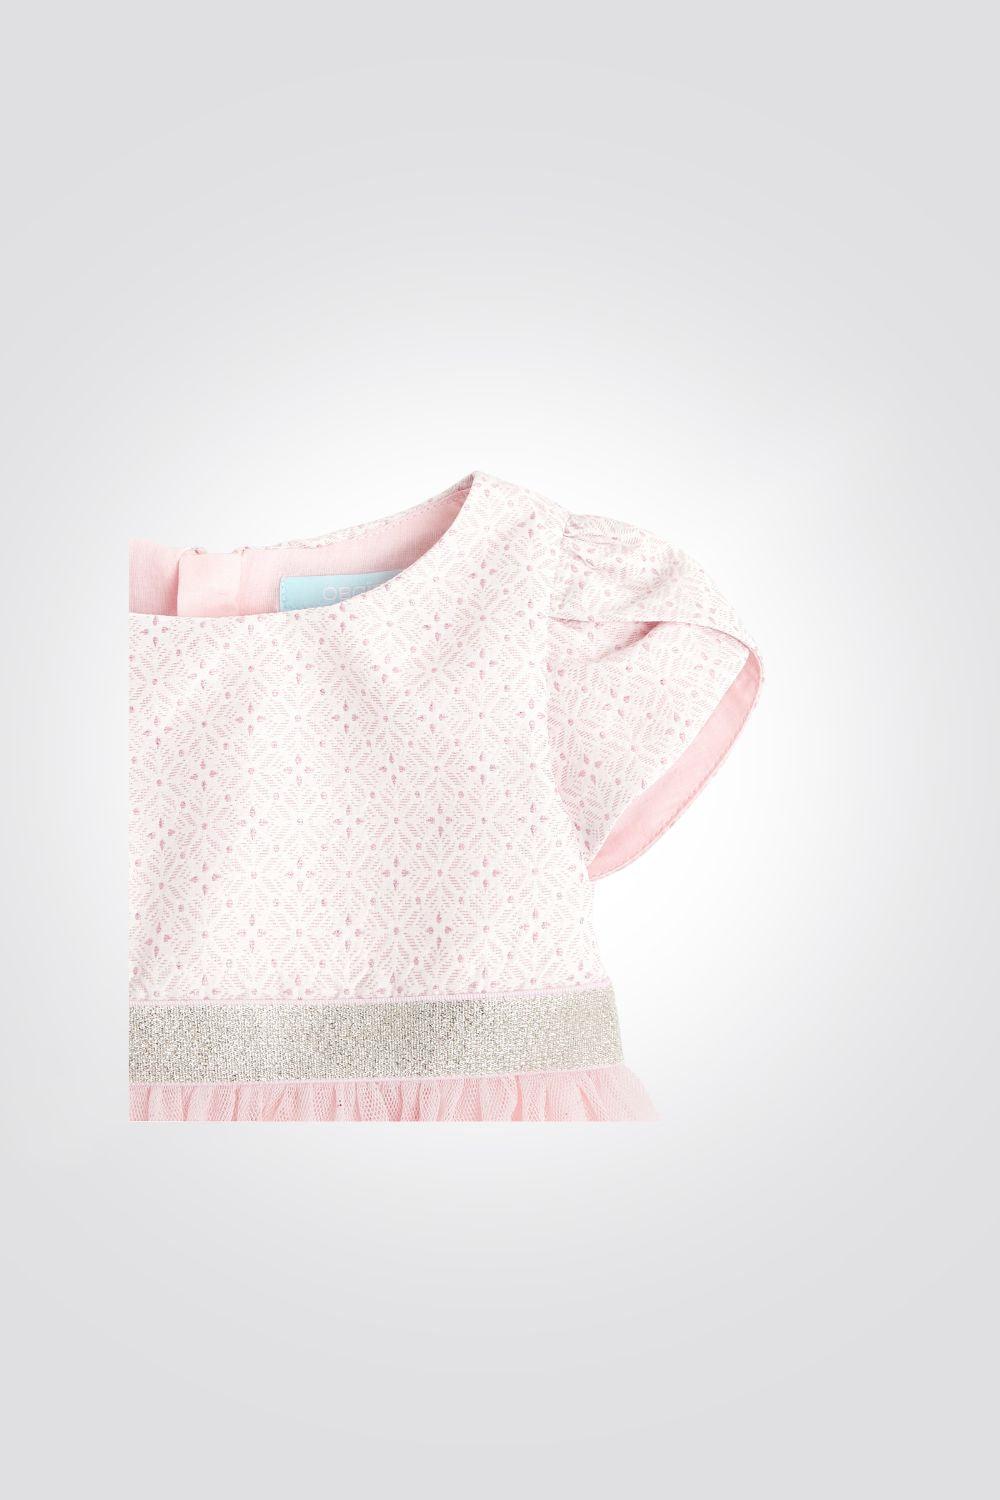 OBAIBI - שמלת טול בצבע ורוד לתינוקות - MASHBIR//365